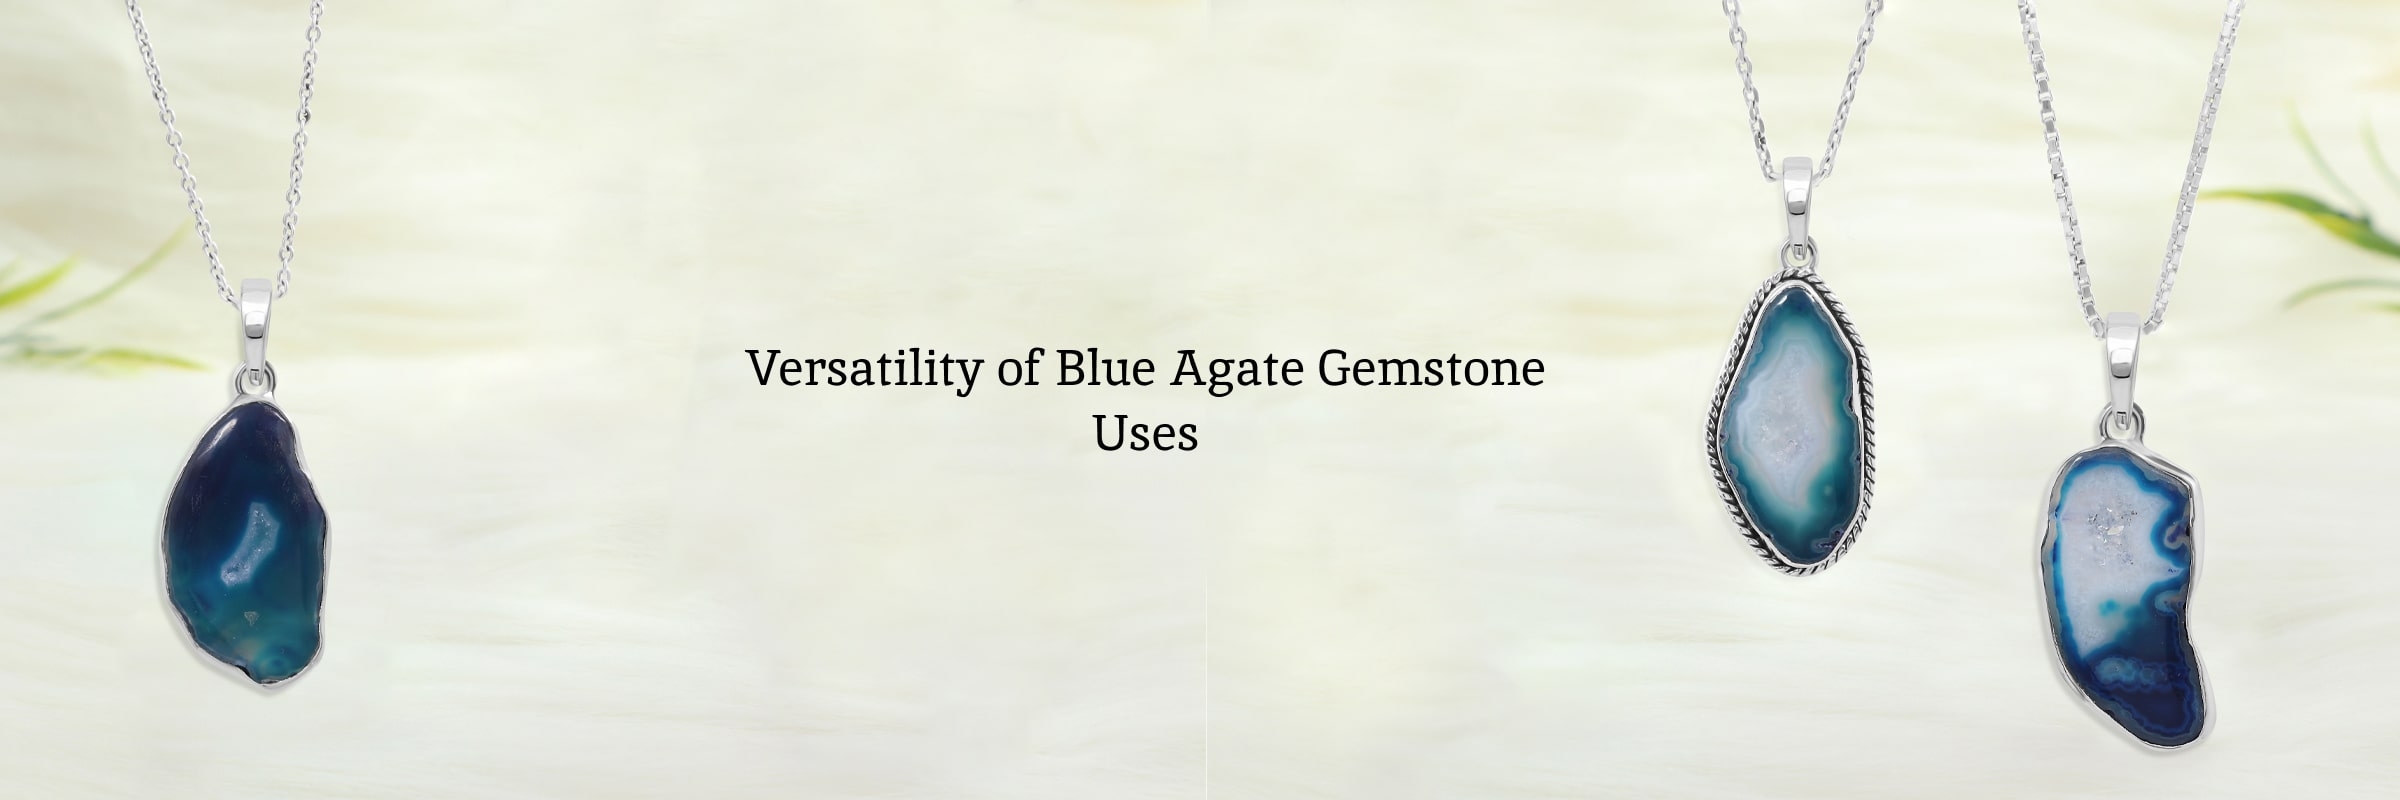 Uses of Blue Agate Gemstone